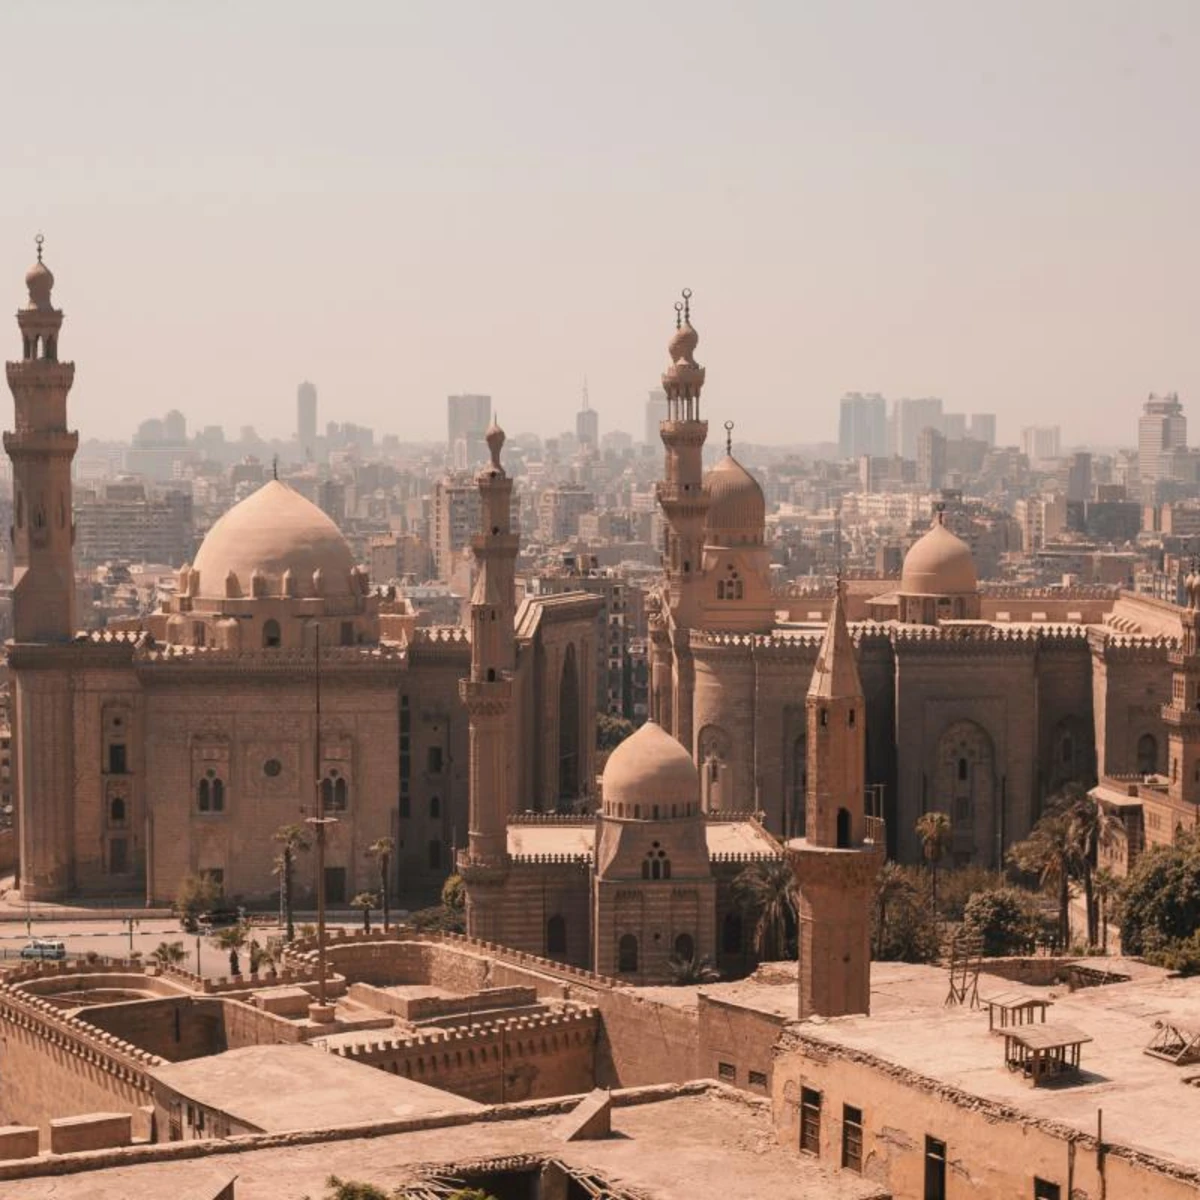 Fora - Travel to Cairo